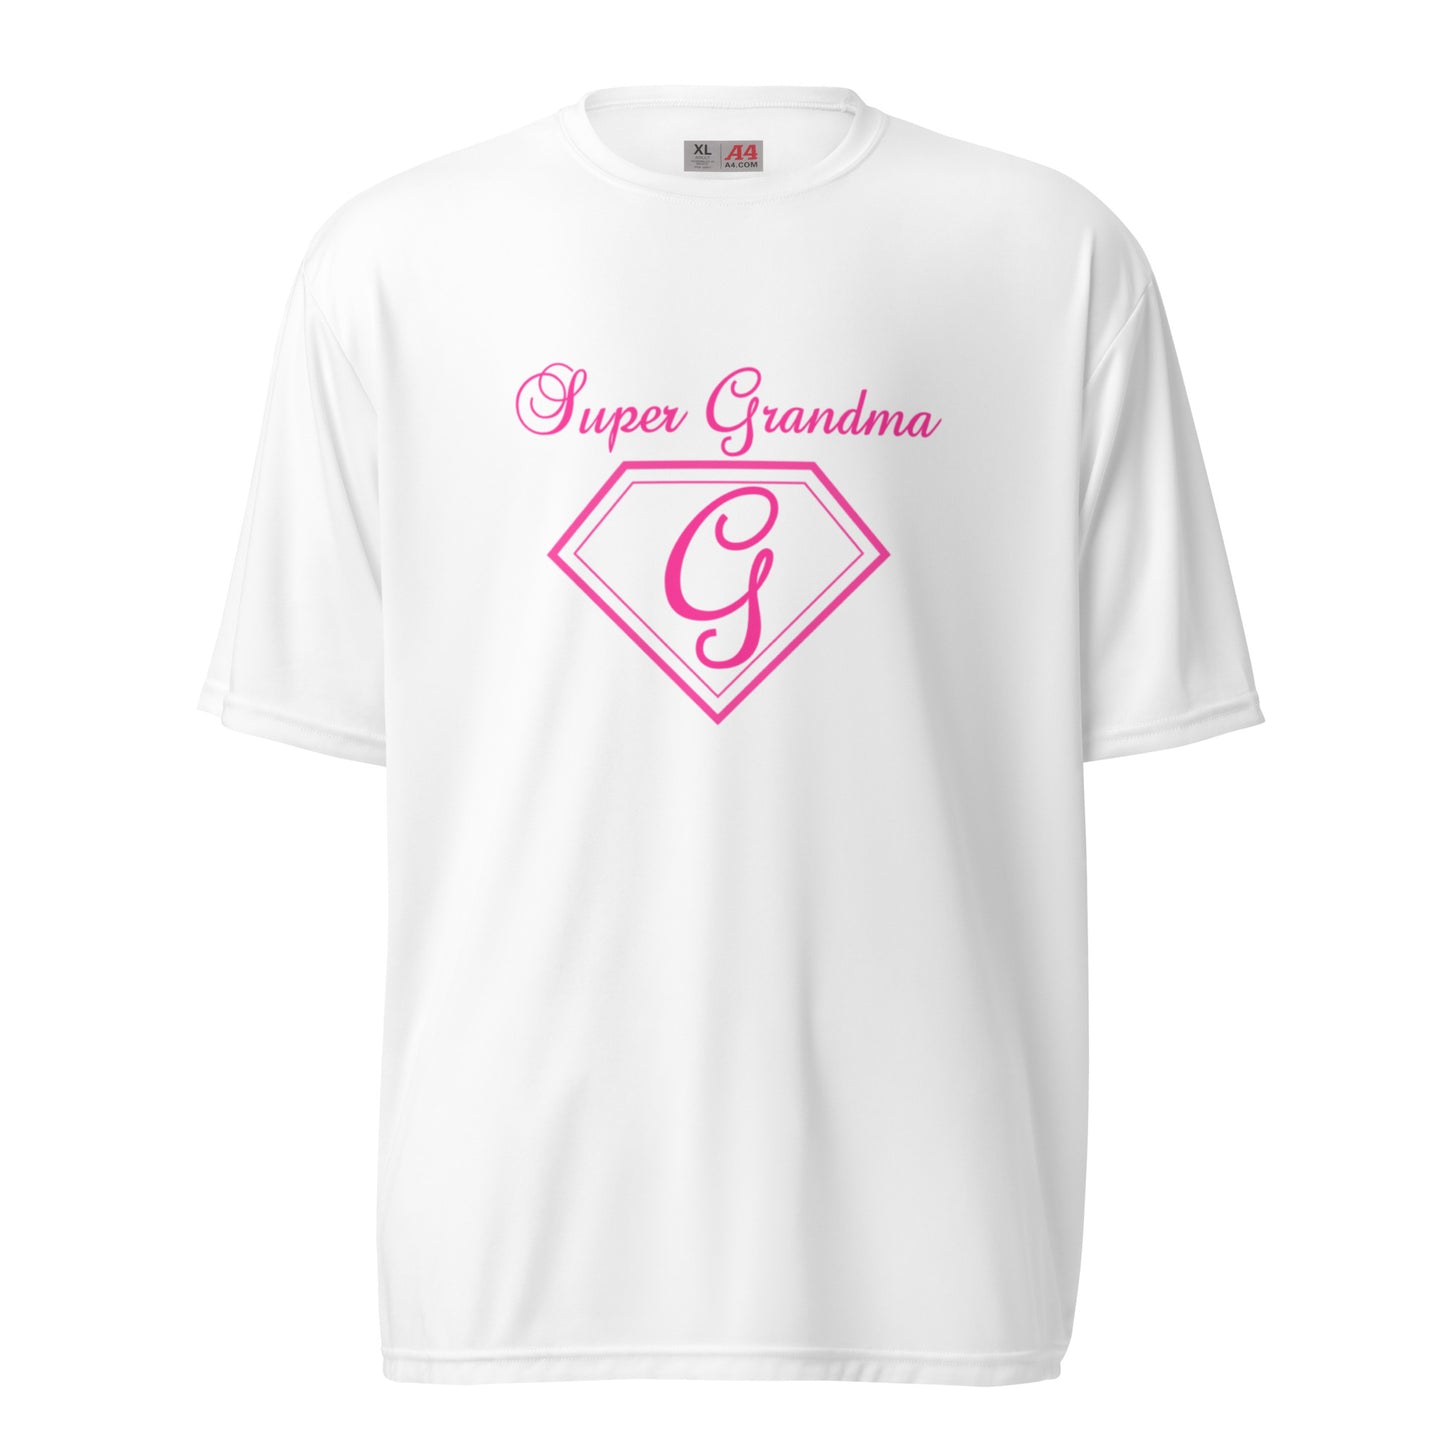 Super Grandma unisex performance crew neck t-shirt - Pink Print